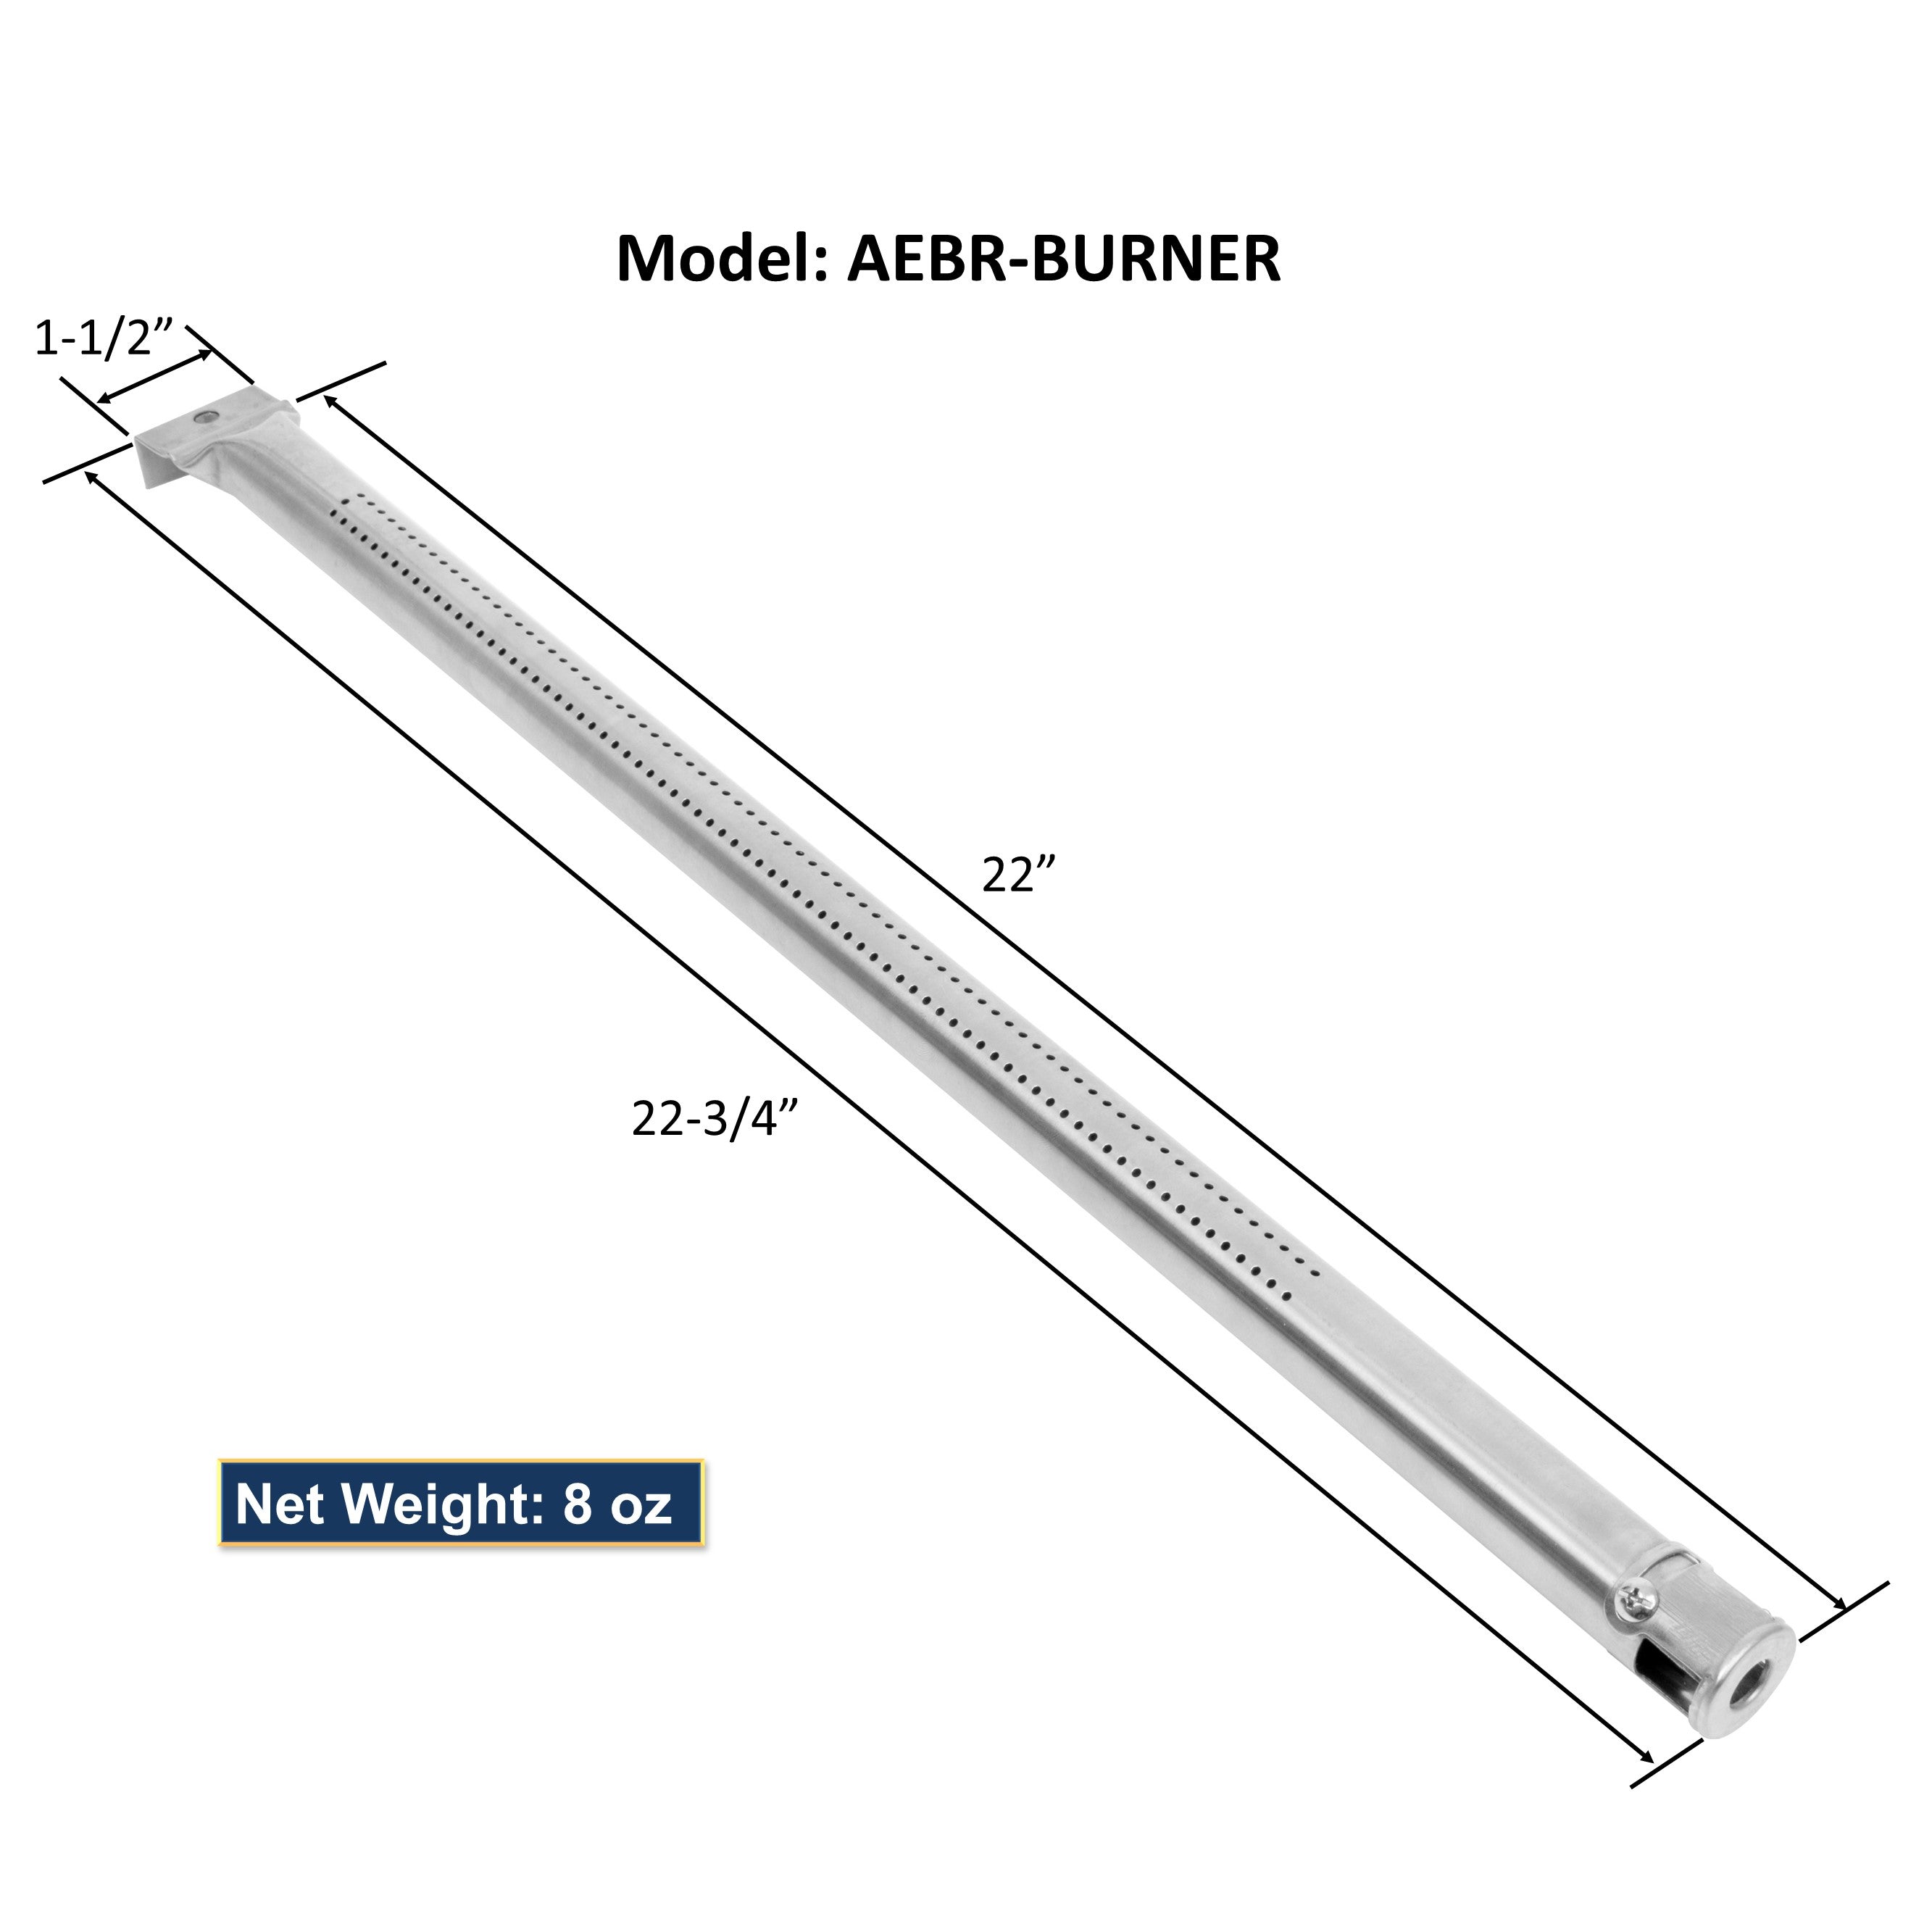 GSW AEBR-BURNER 22-3/4” x 1-1/2” Straight Stainless Steel Tube Burner (20,000 BTU) for AEBR Series Commercial Countertop Broilers